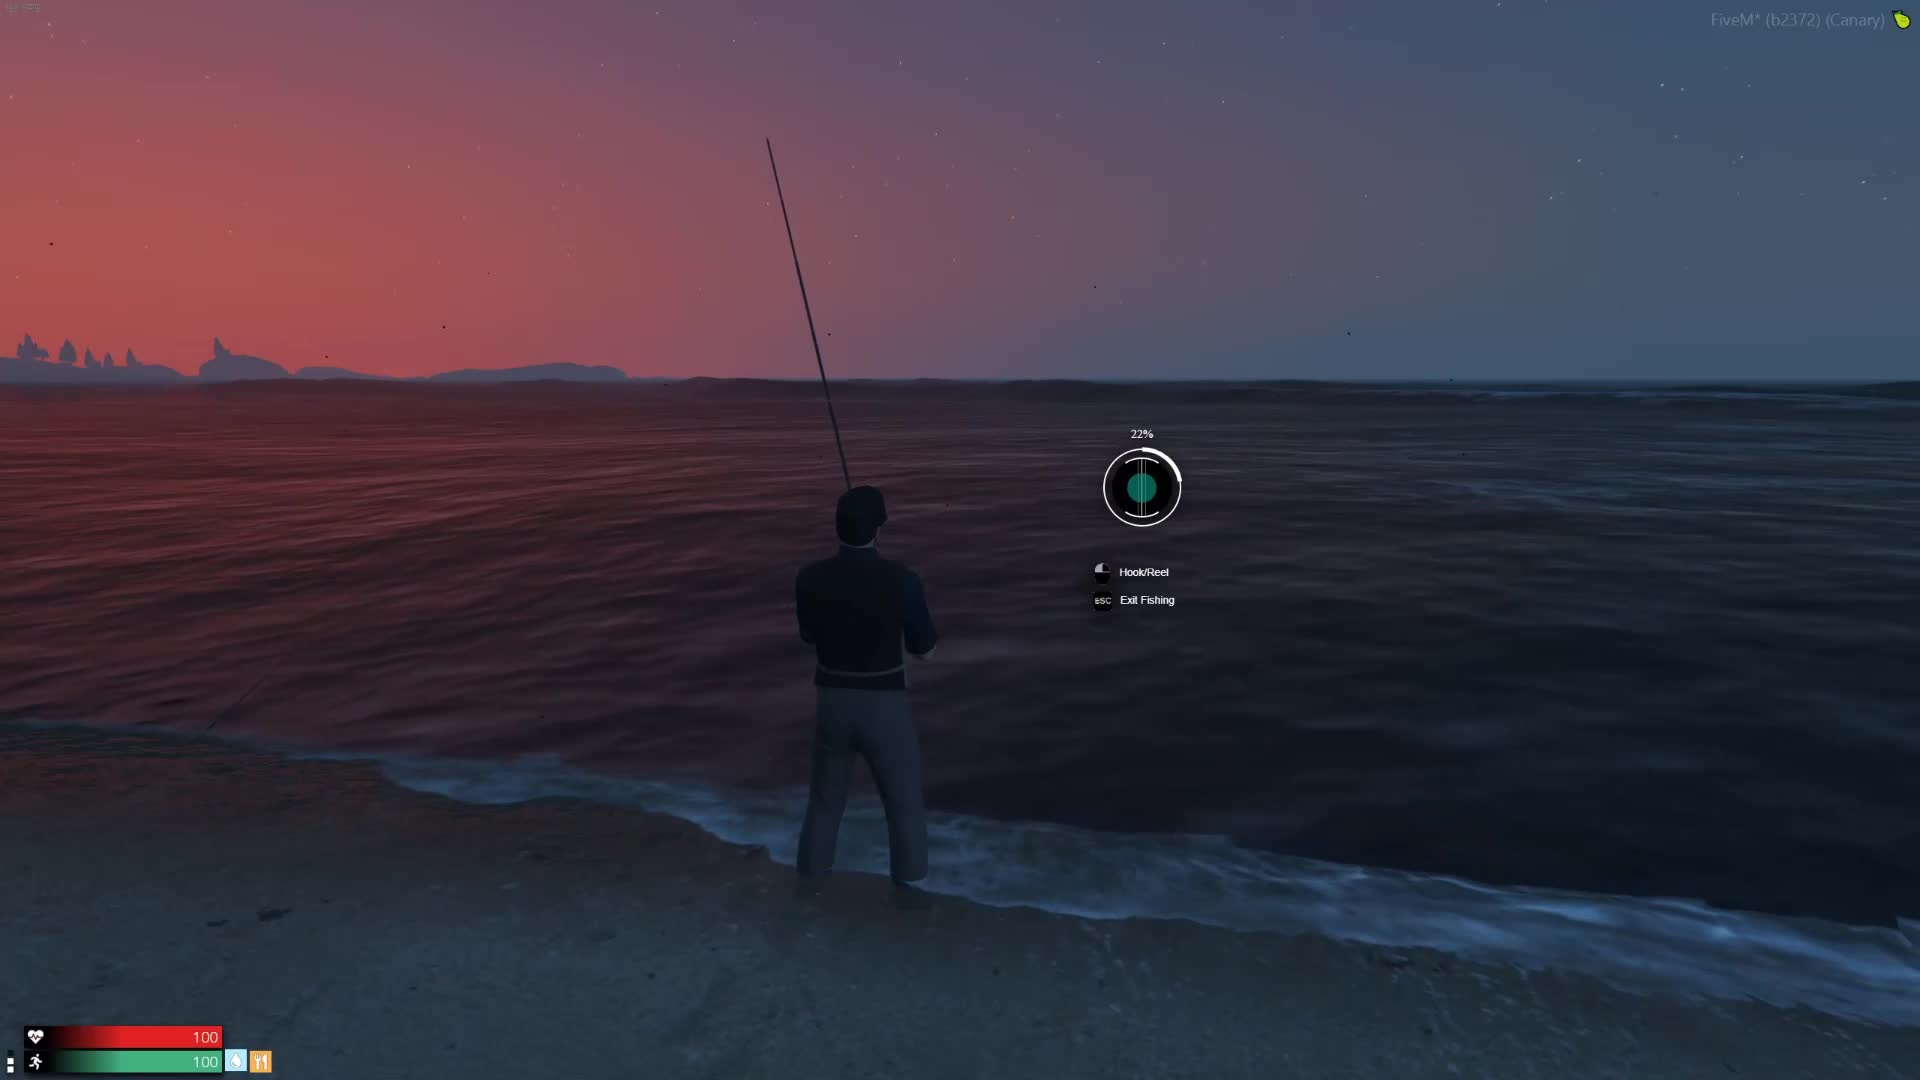 i use the mod skip fishing minigame, but i'm having problem to